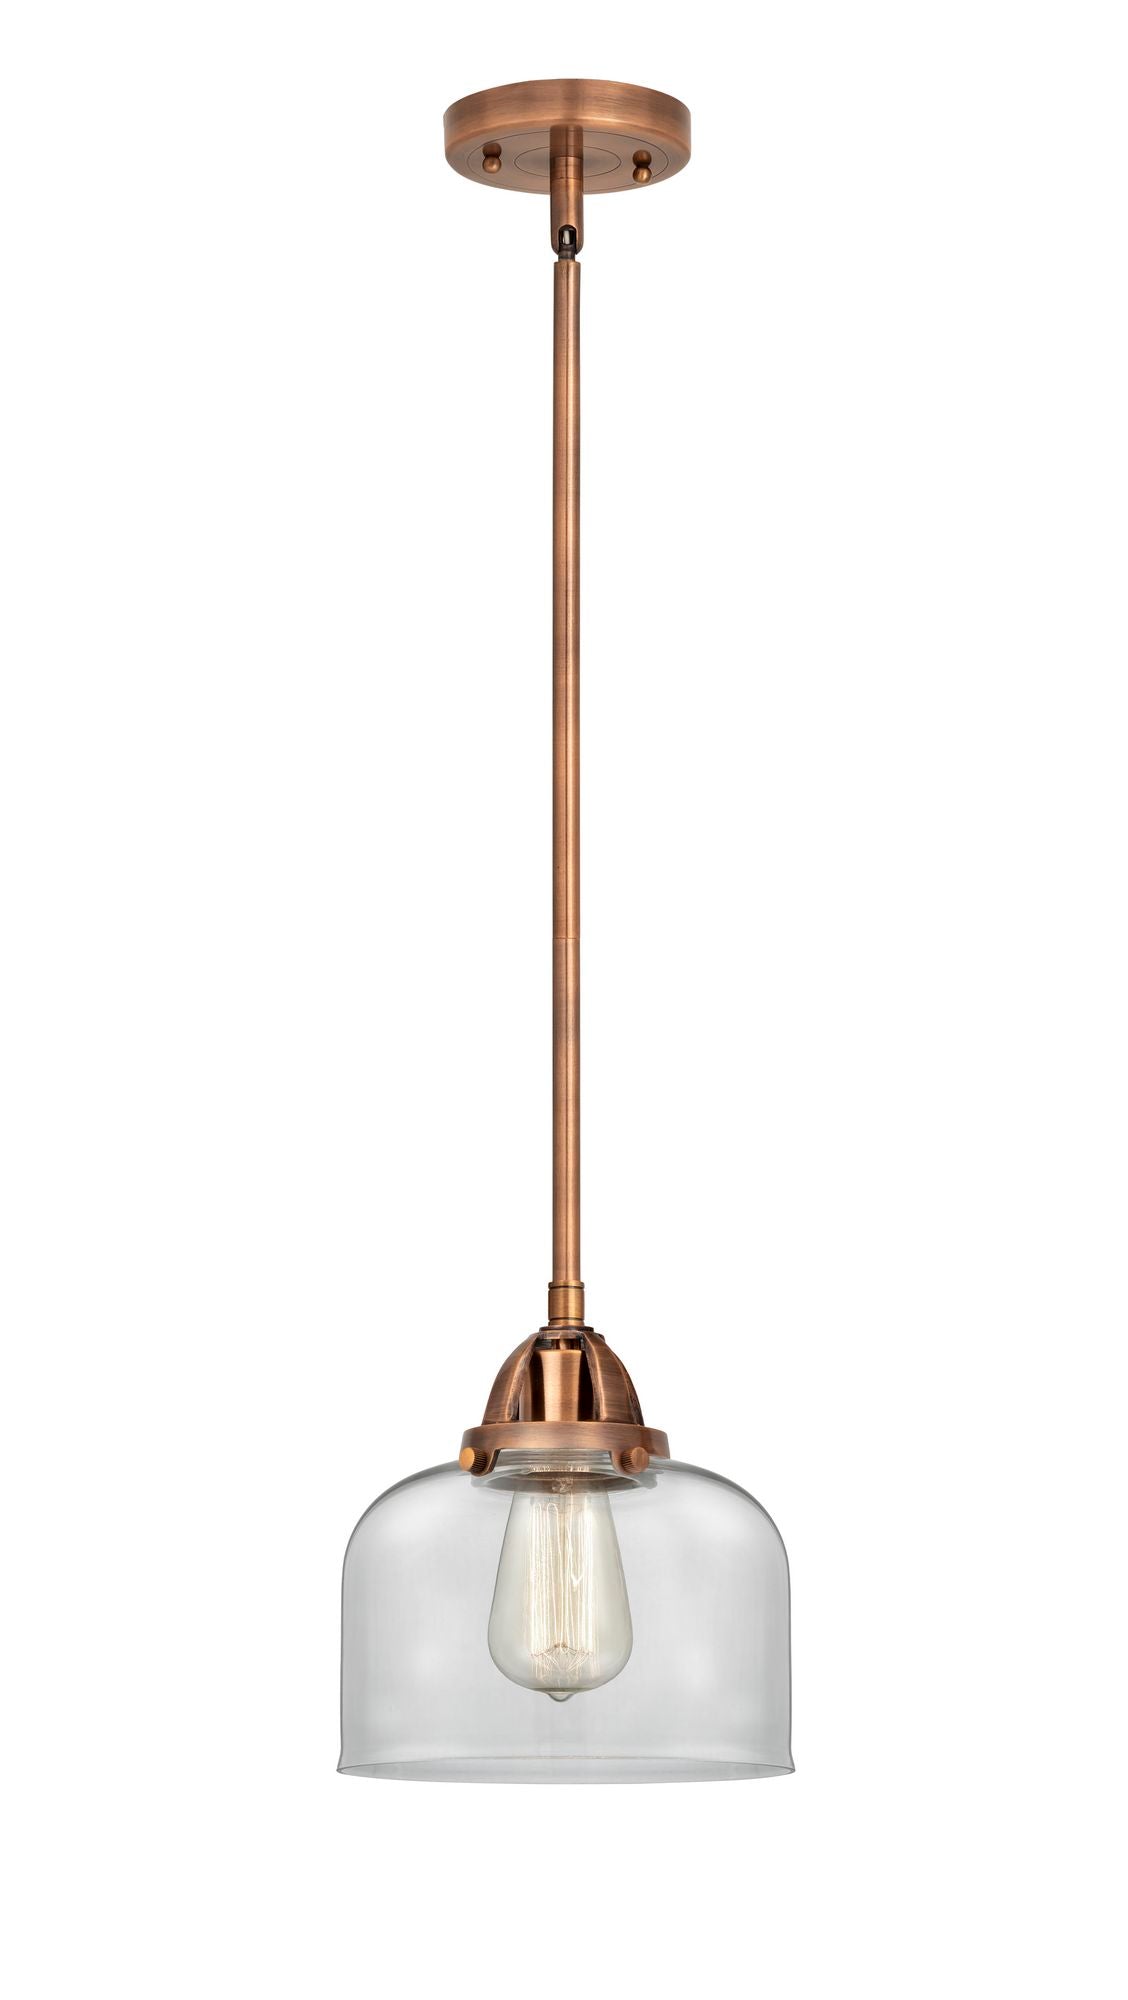 Stem Hung 8" Antique Copper Mini Pendant - Clear Large Bell Glass LED